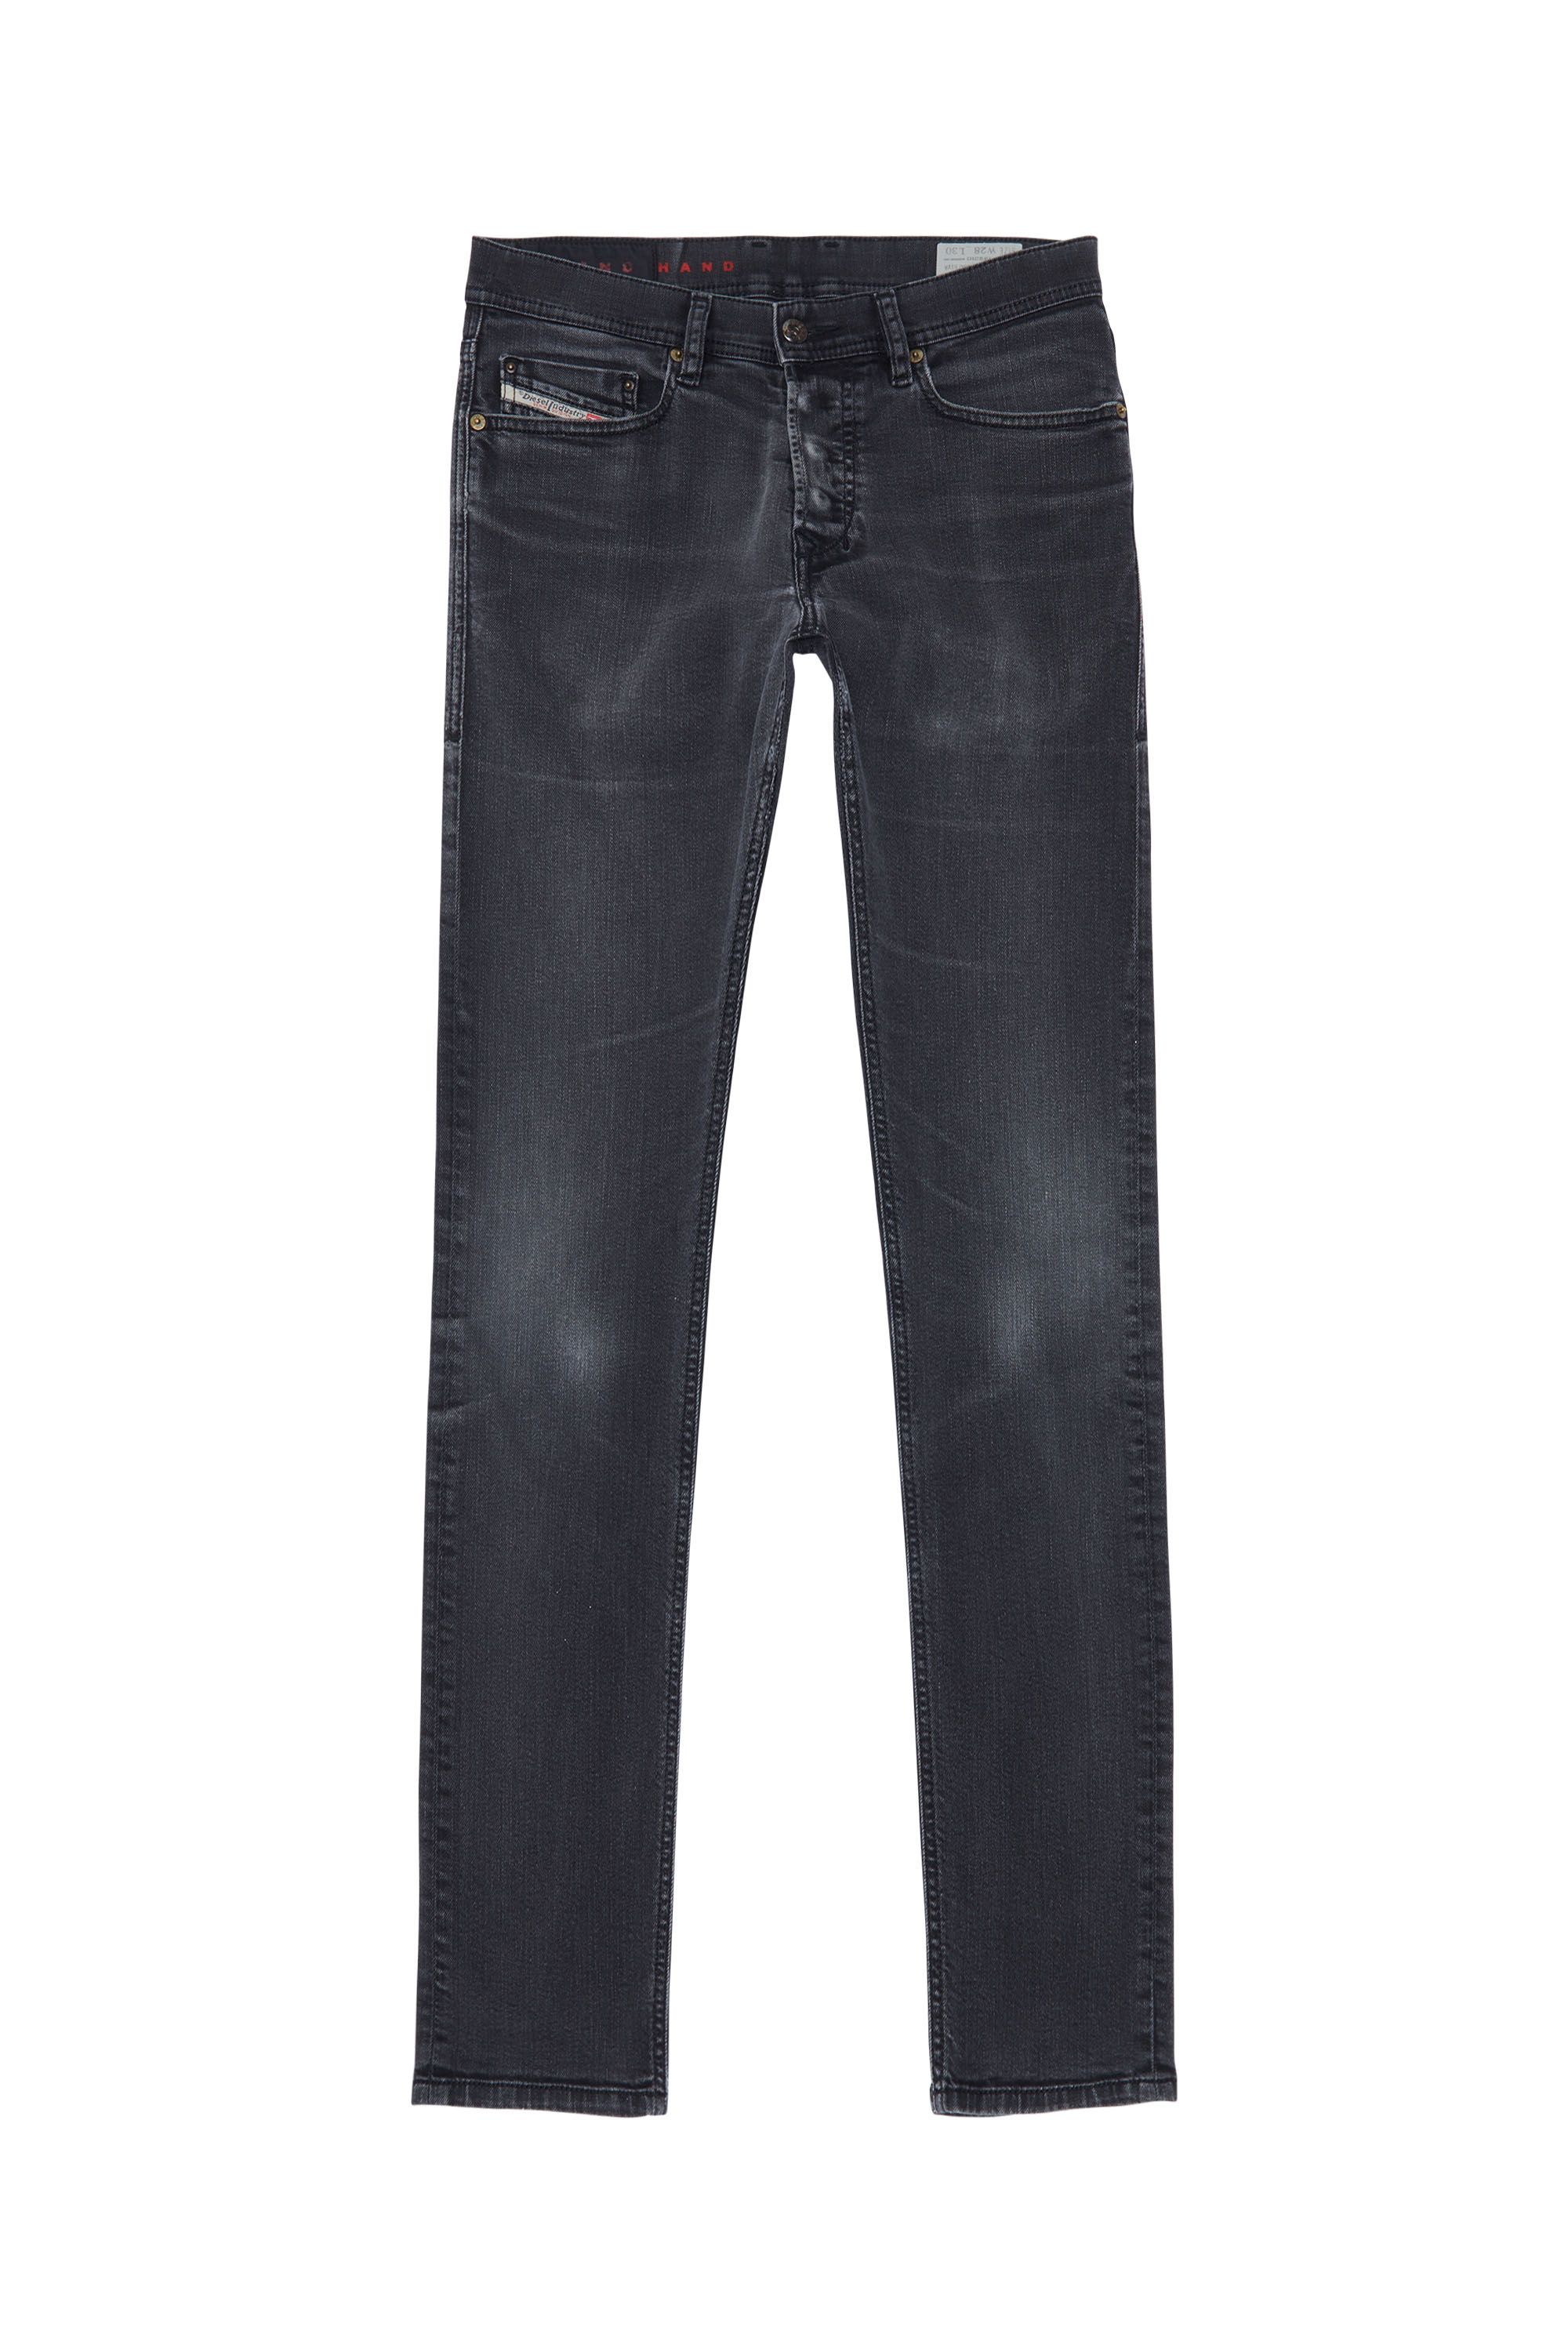 TEPPHAR, Black/Dark grey - Jeans